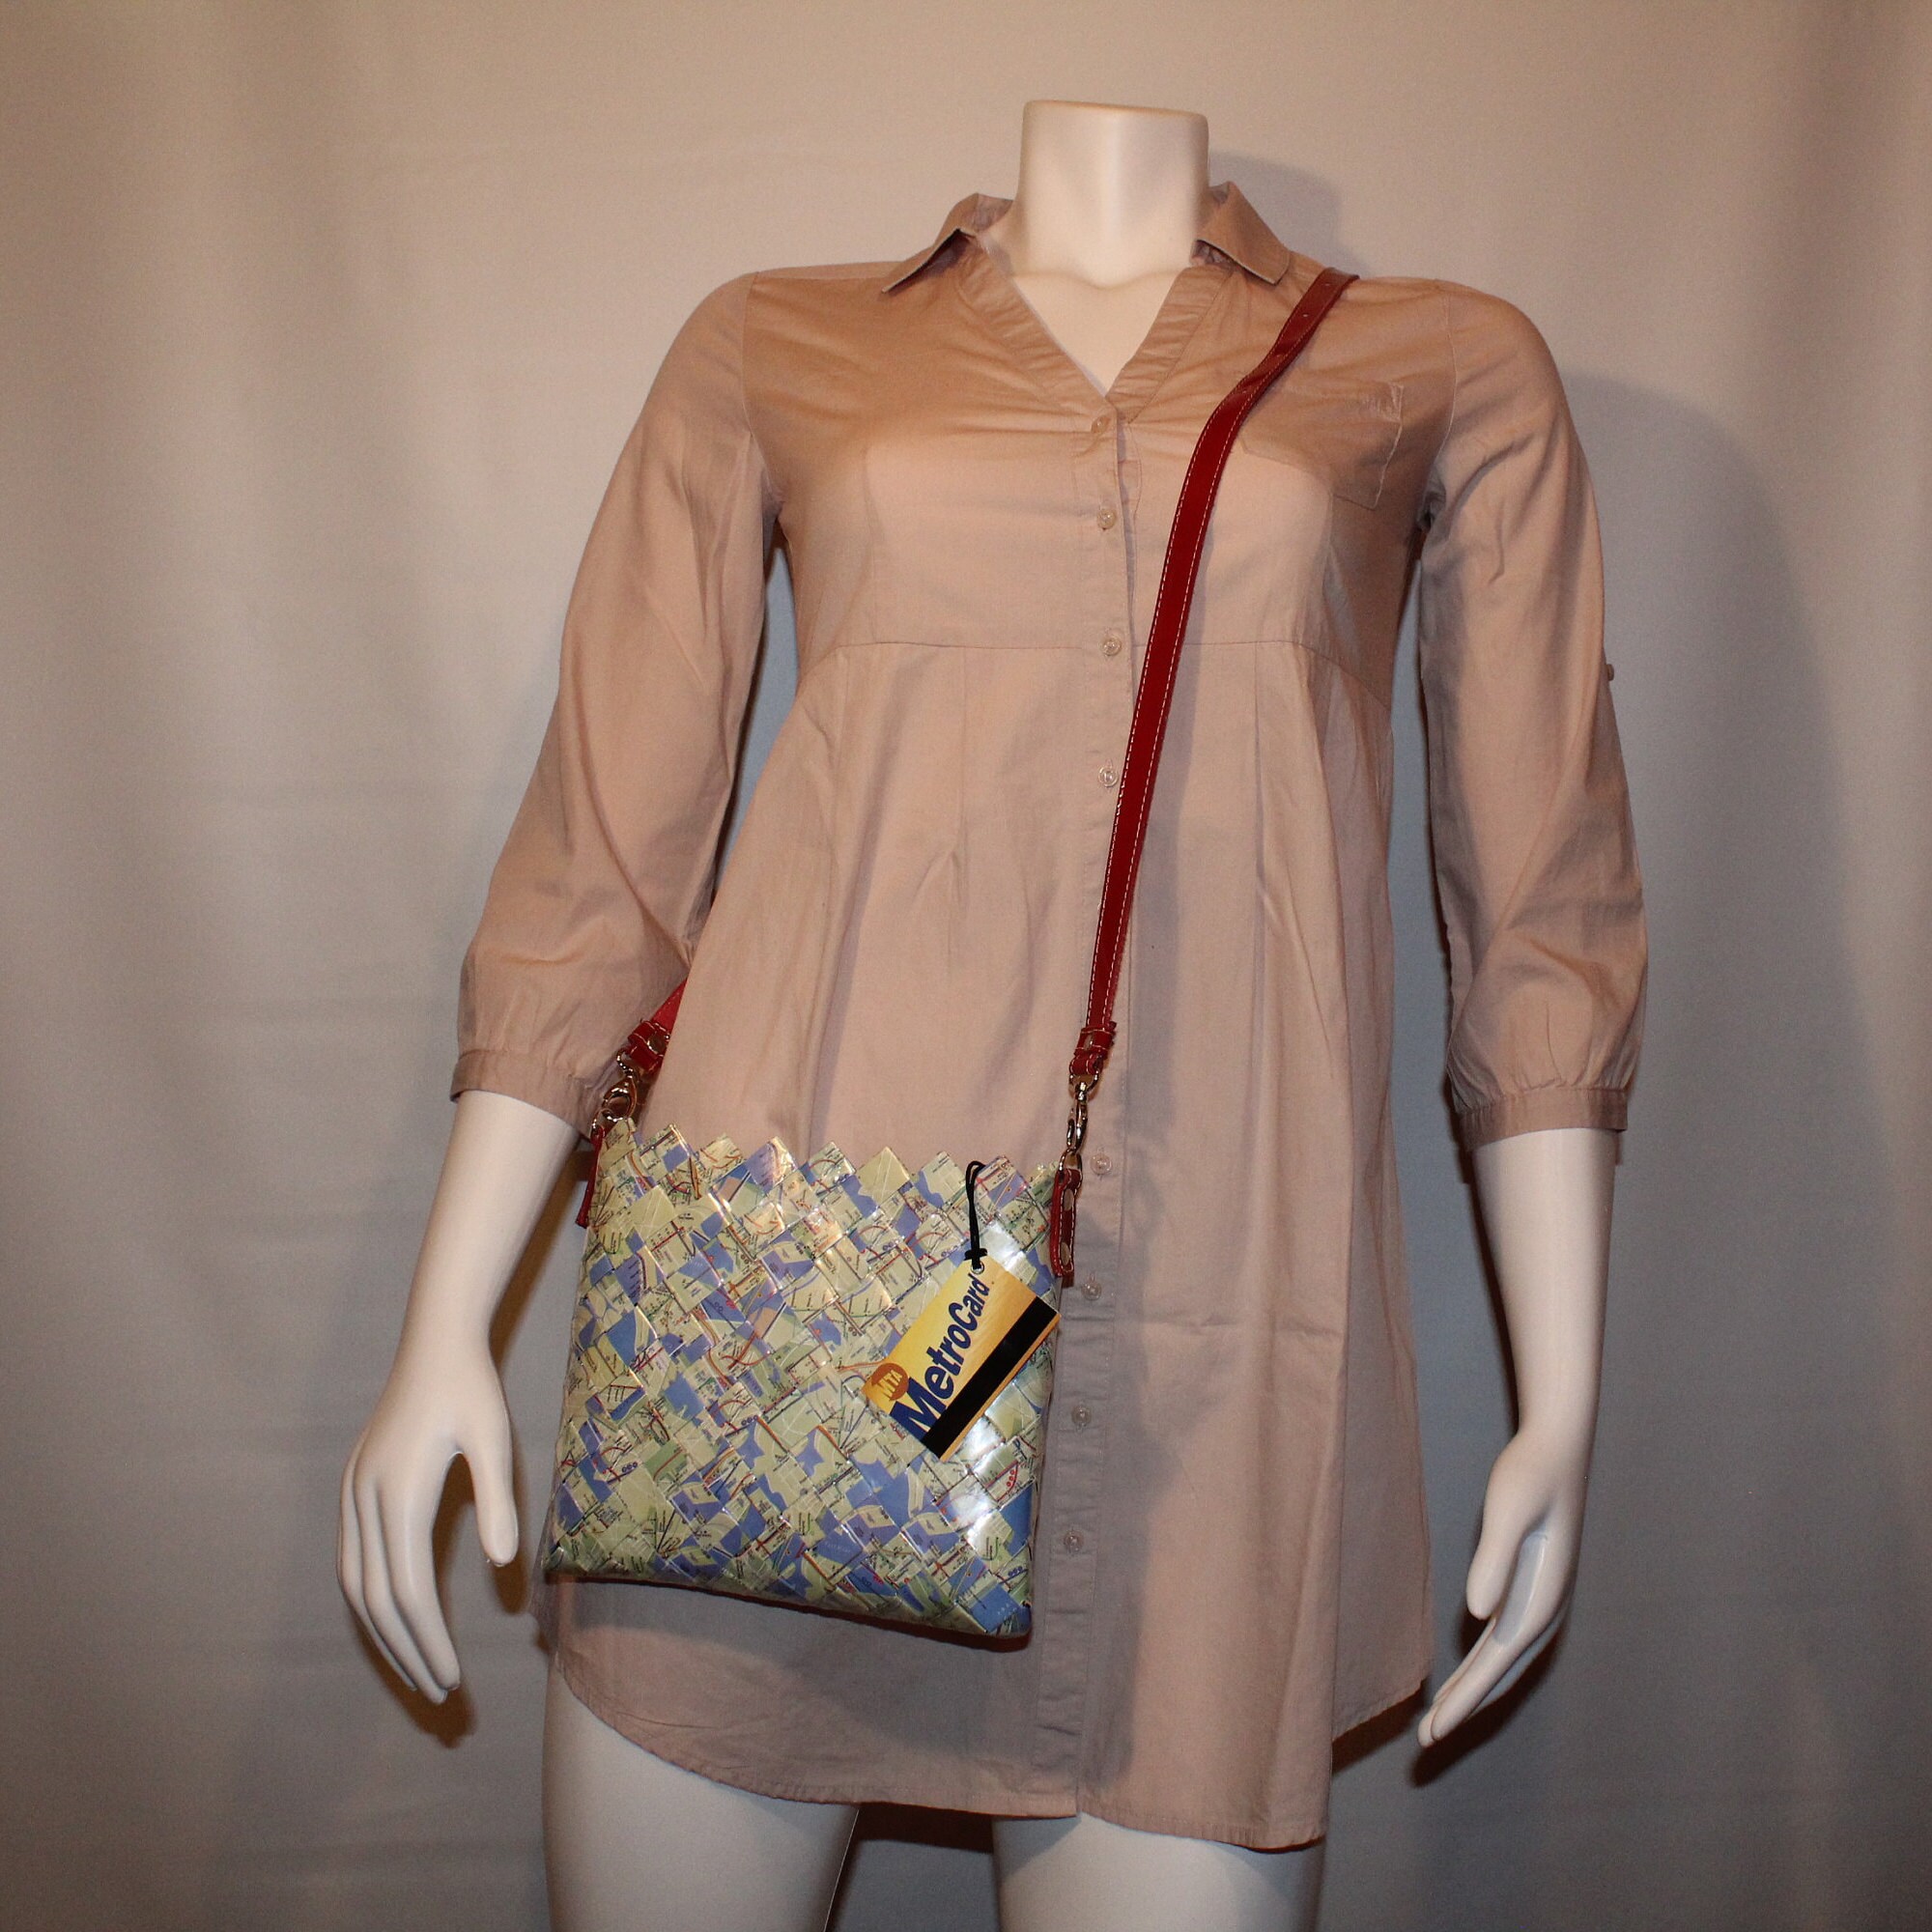 Shop METROCITY Unisex Street Style Messenger & Shoulder Bags by K